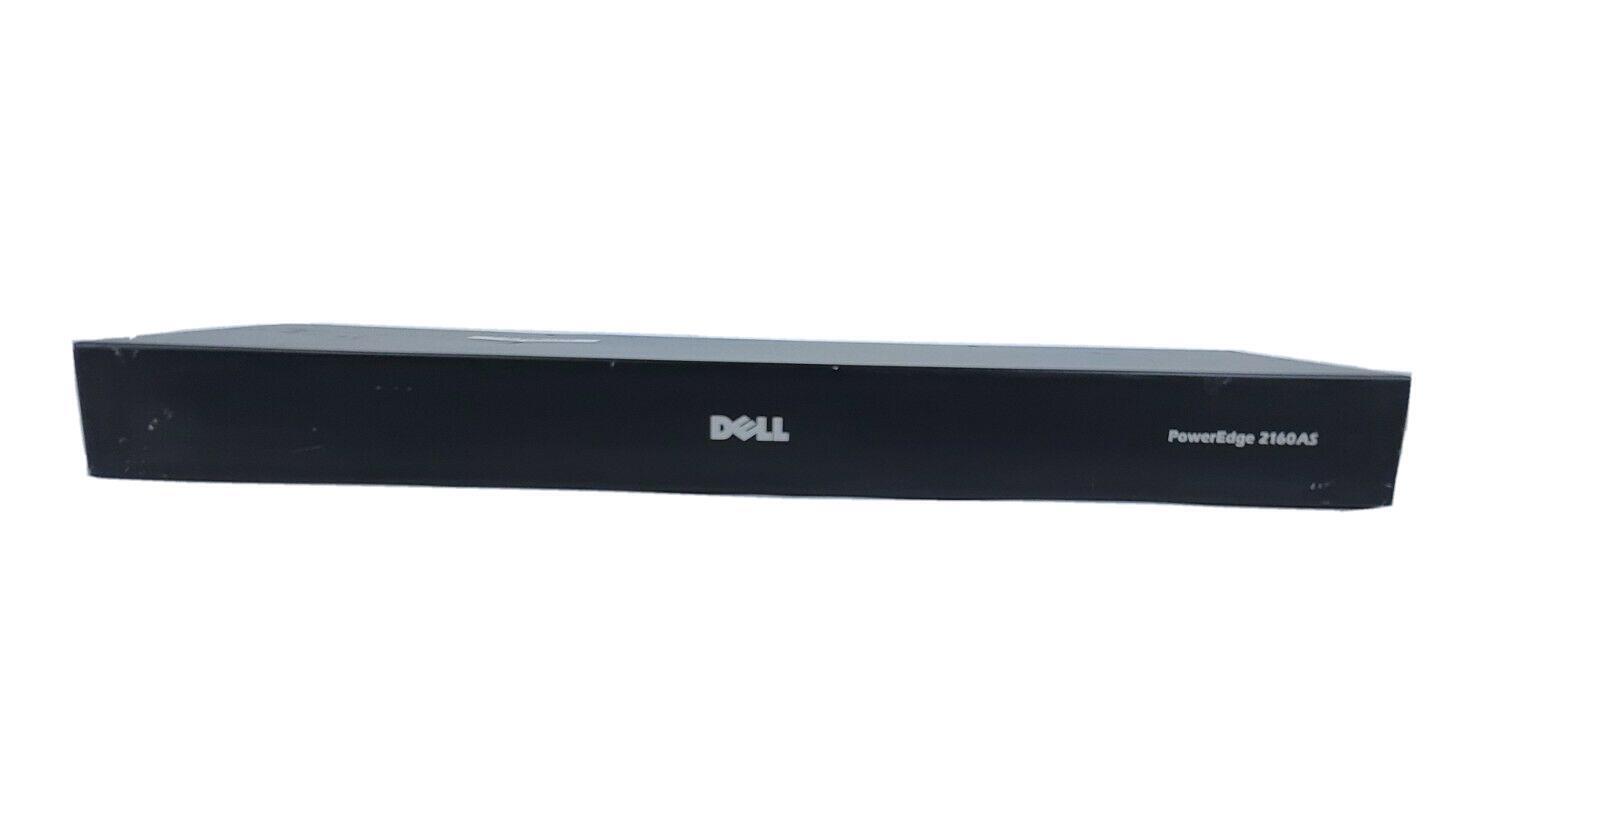 Dell PowerEdge 2160AS 16-port KVM Switch